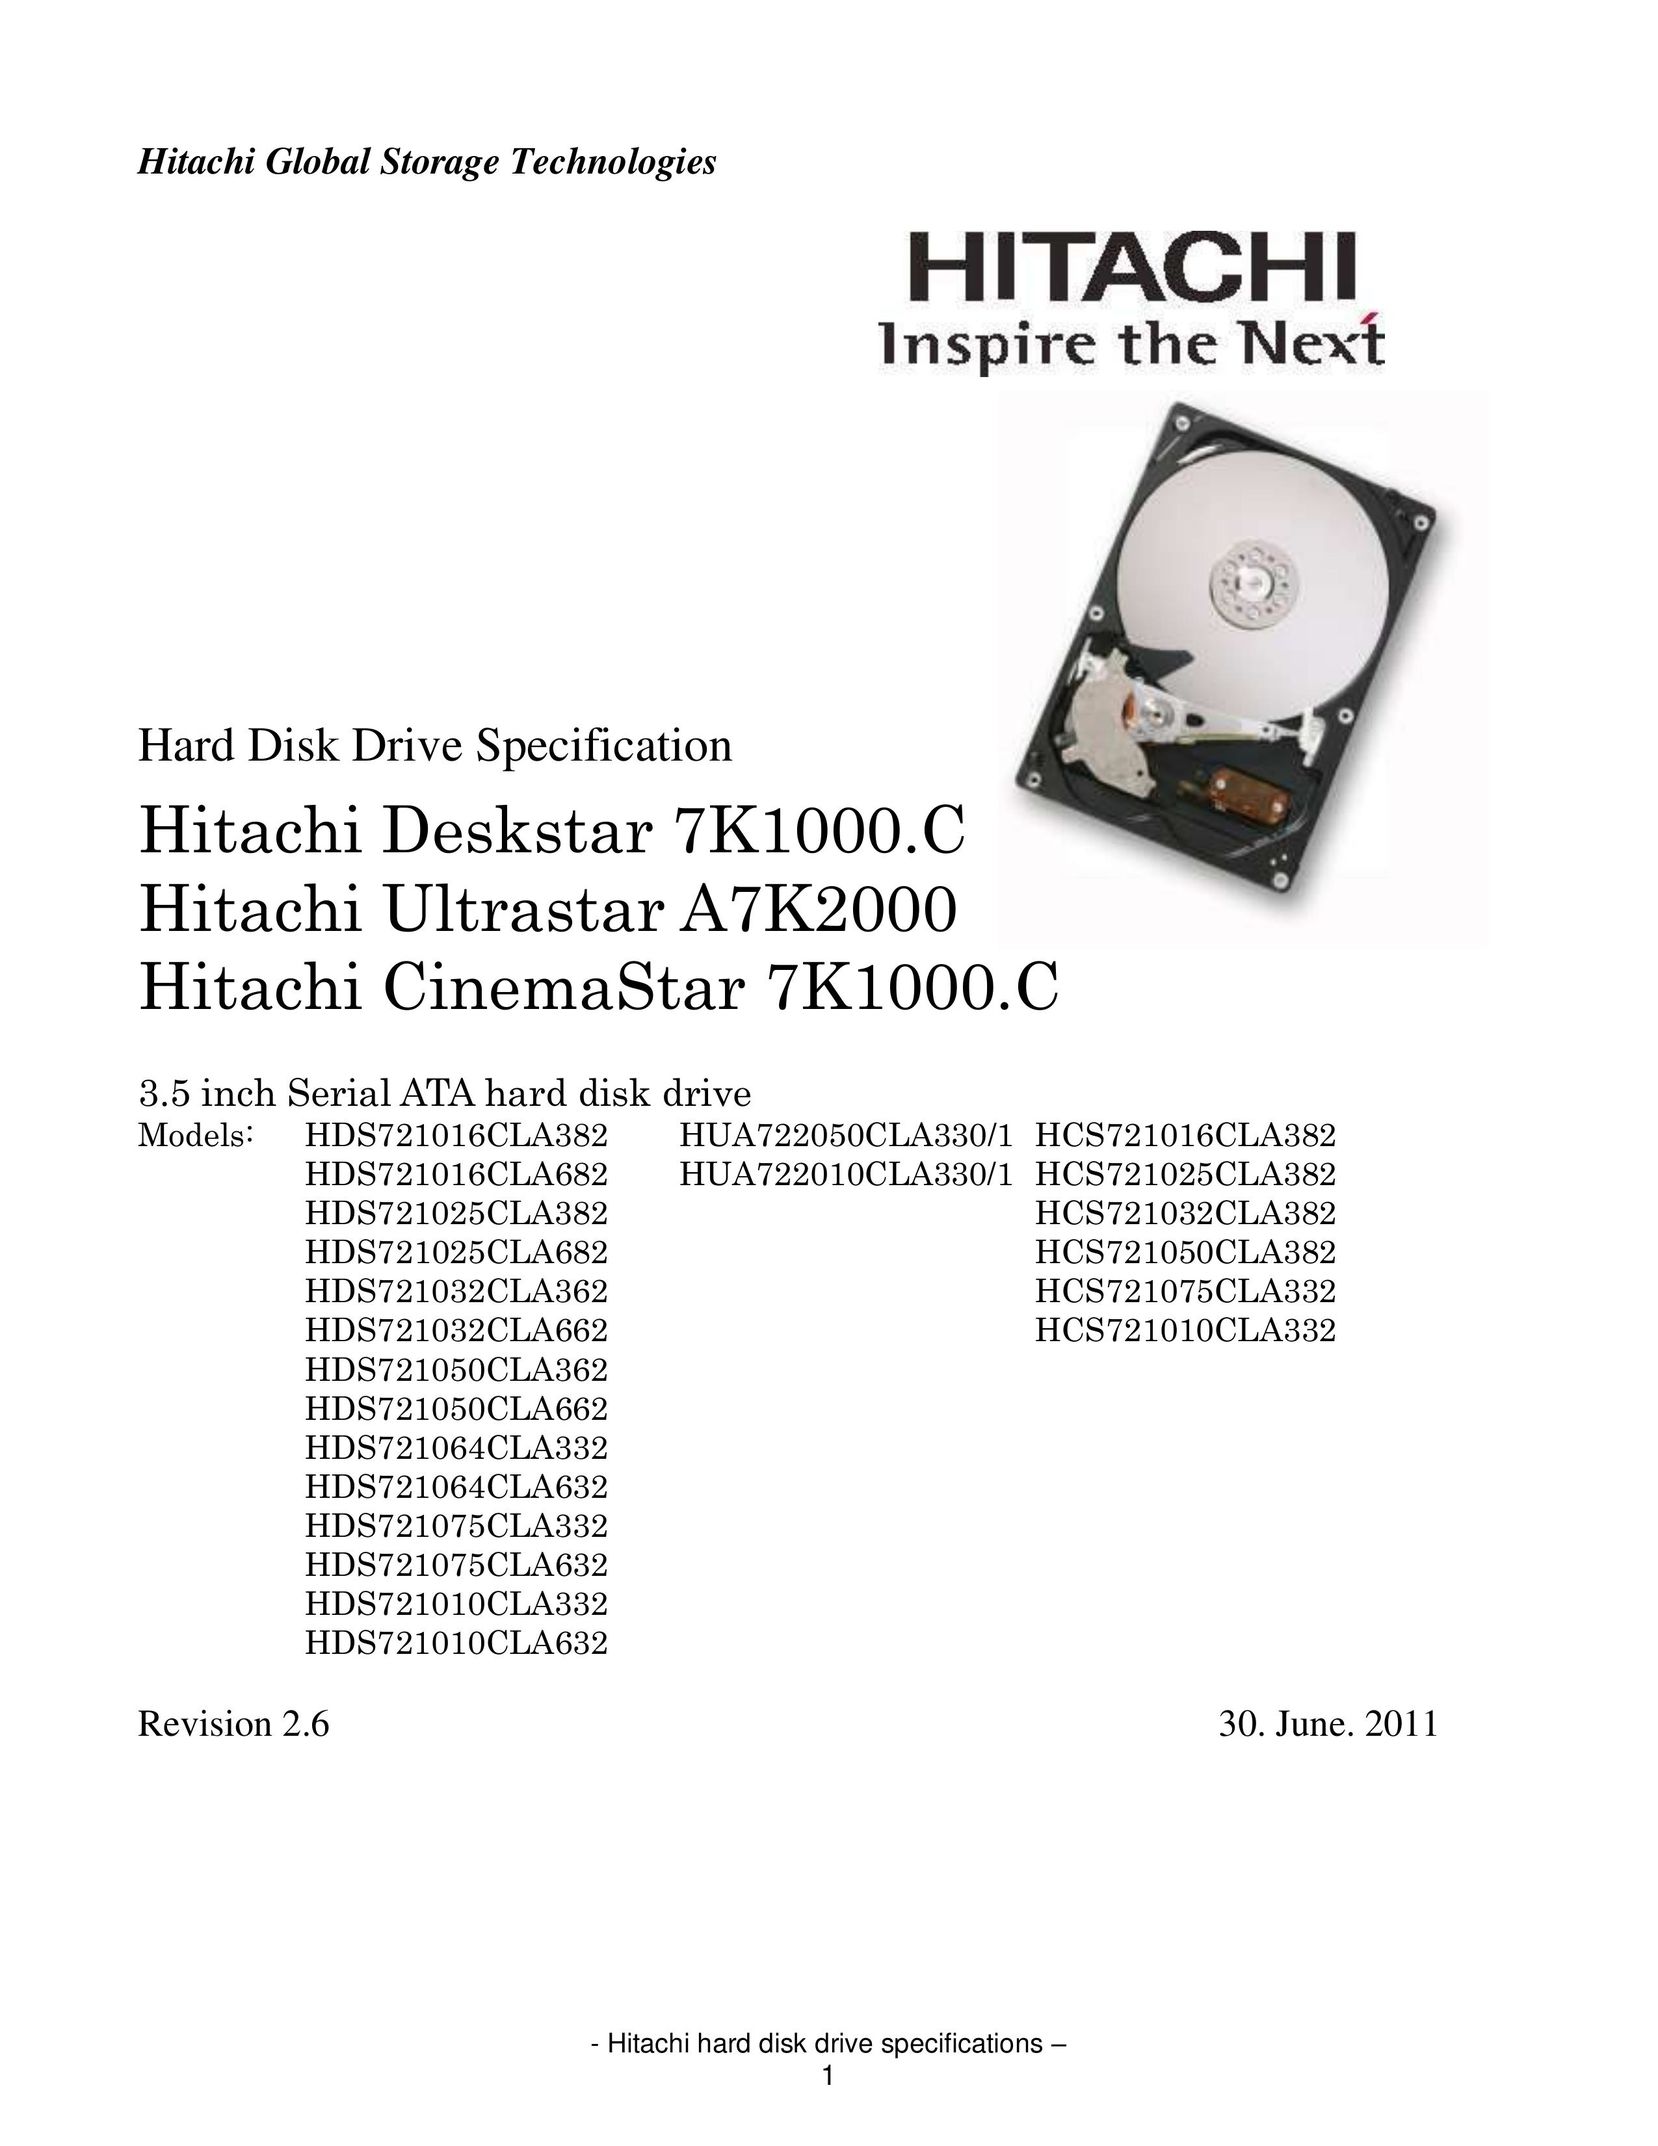 Hitachi HCS721075CLA332 Computer Drive User Manual